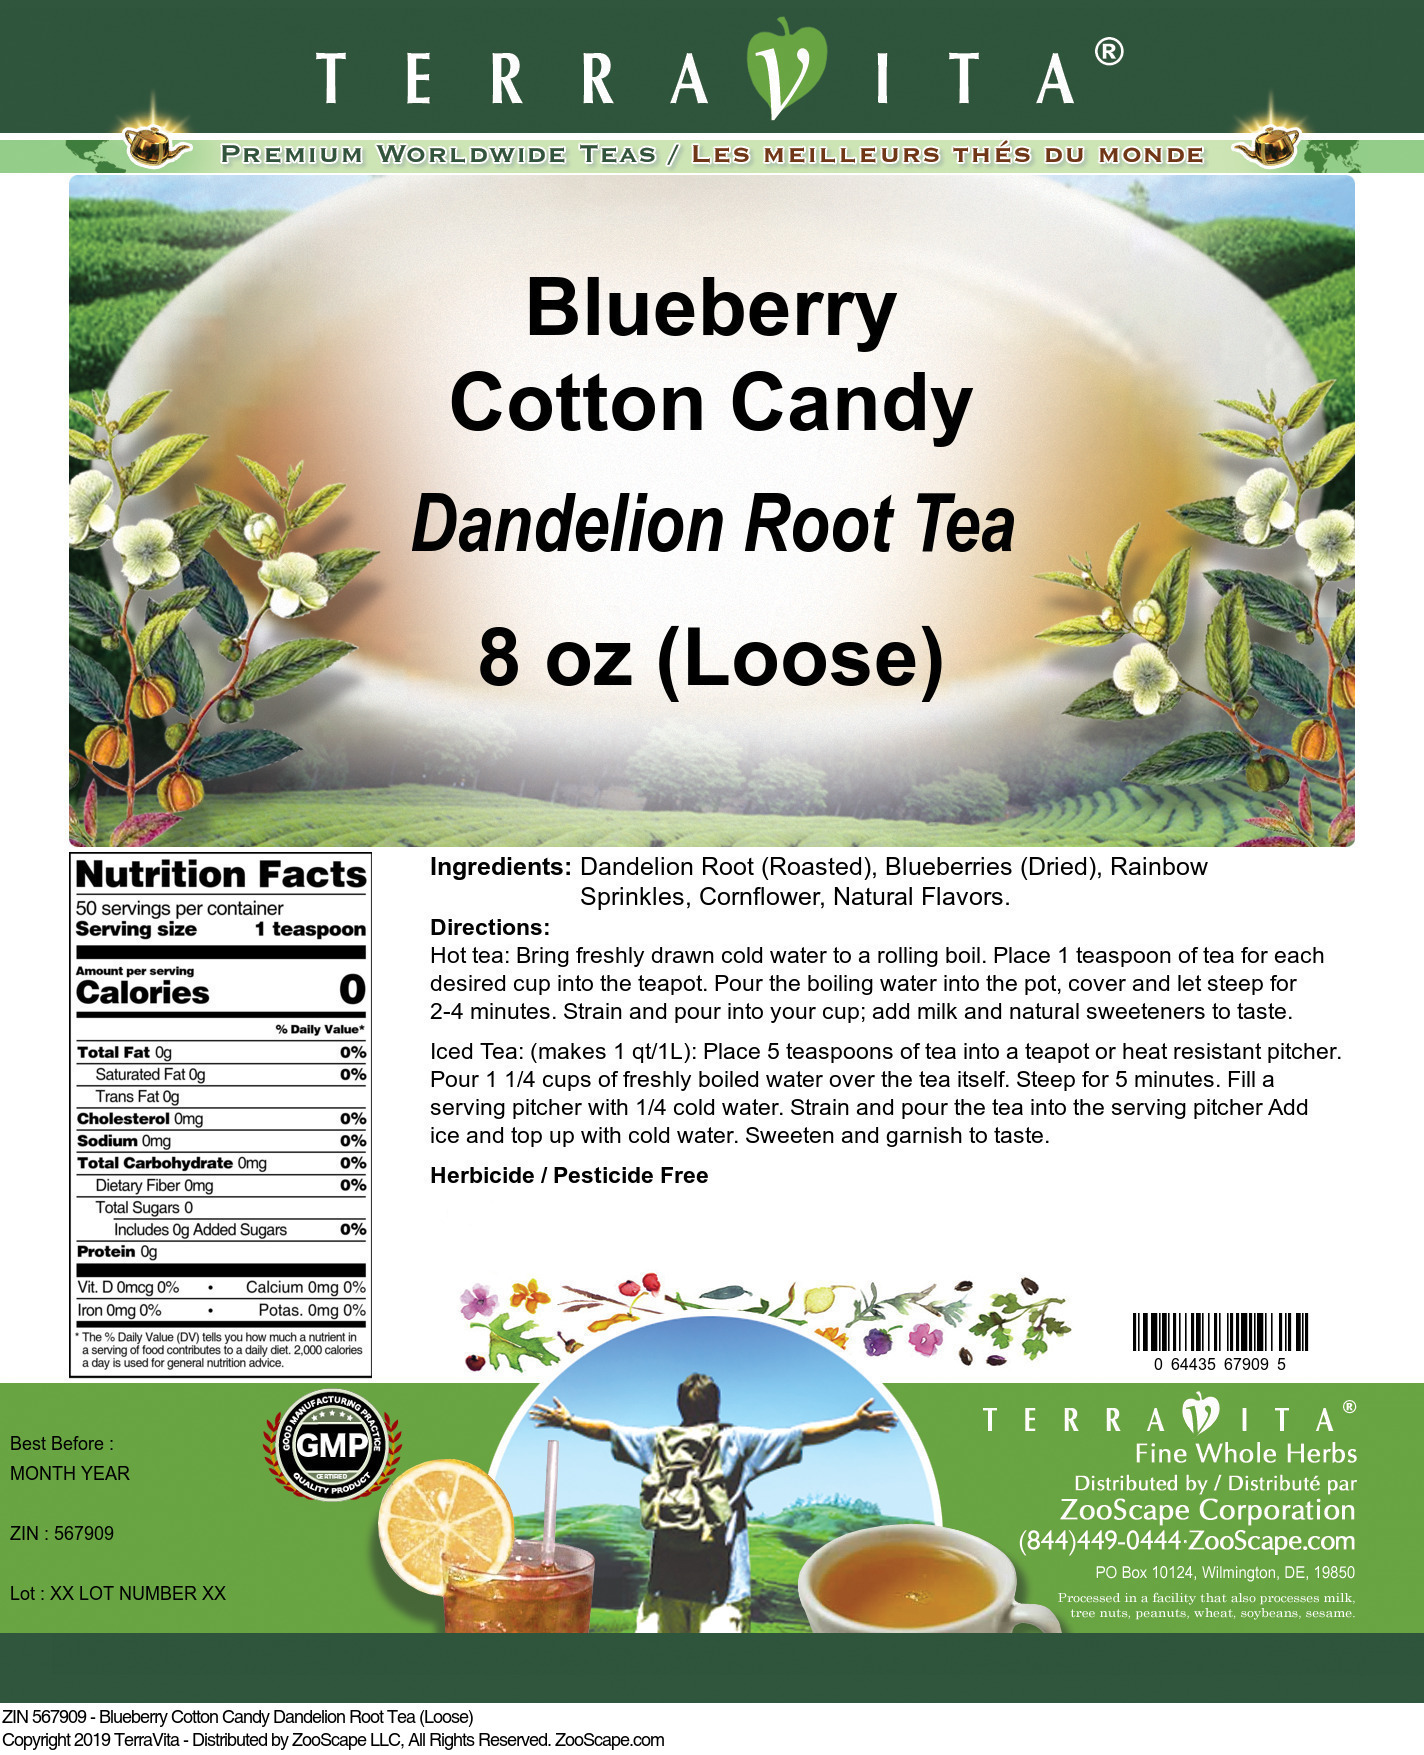 Blueberry Cotton Candy Dandelion Root Tea (Loose) - Label